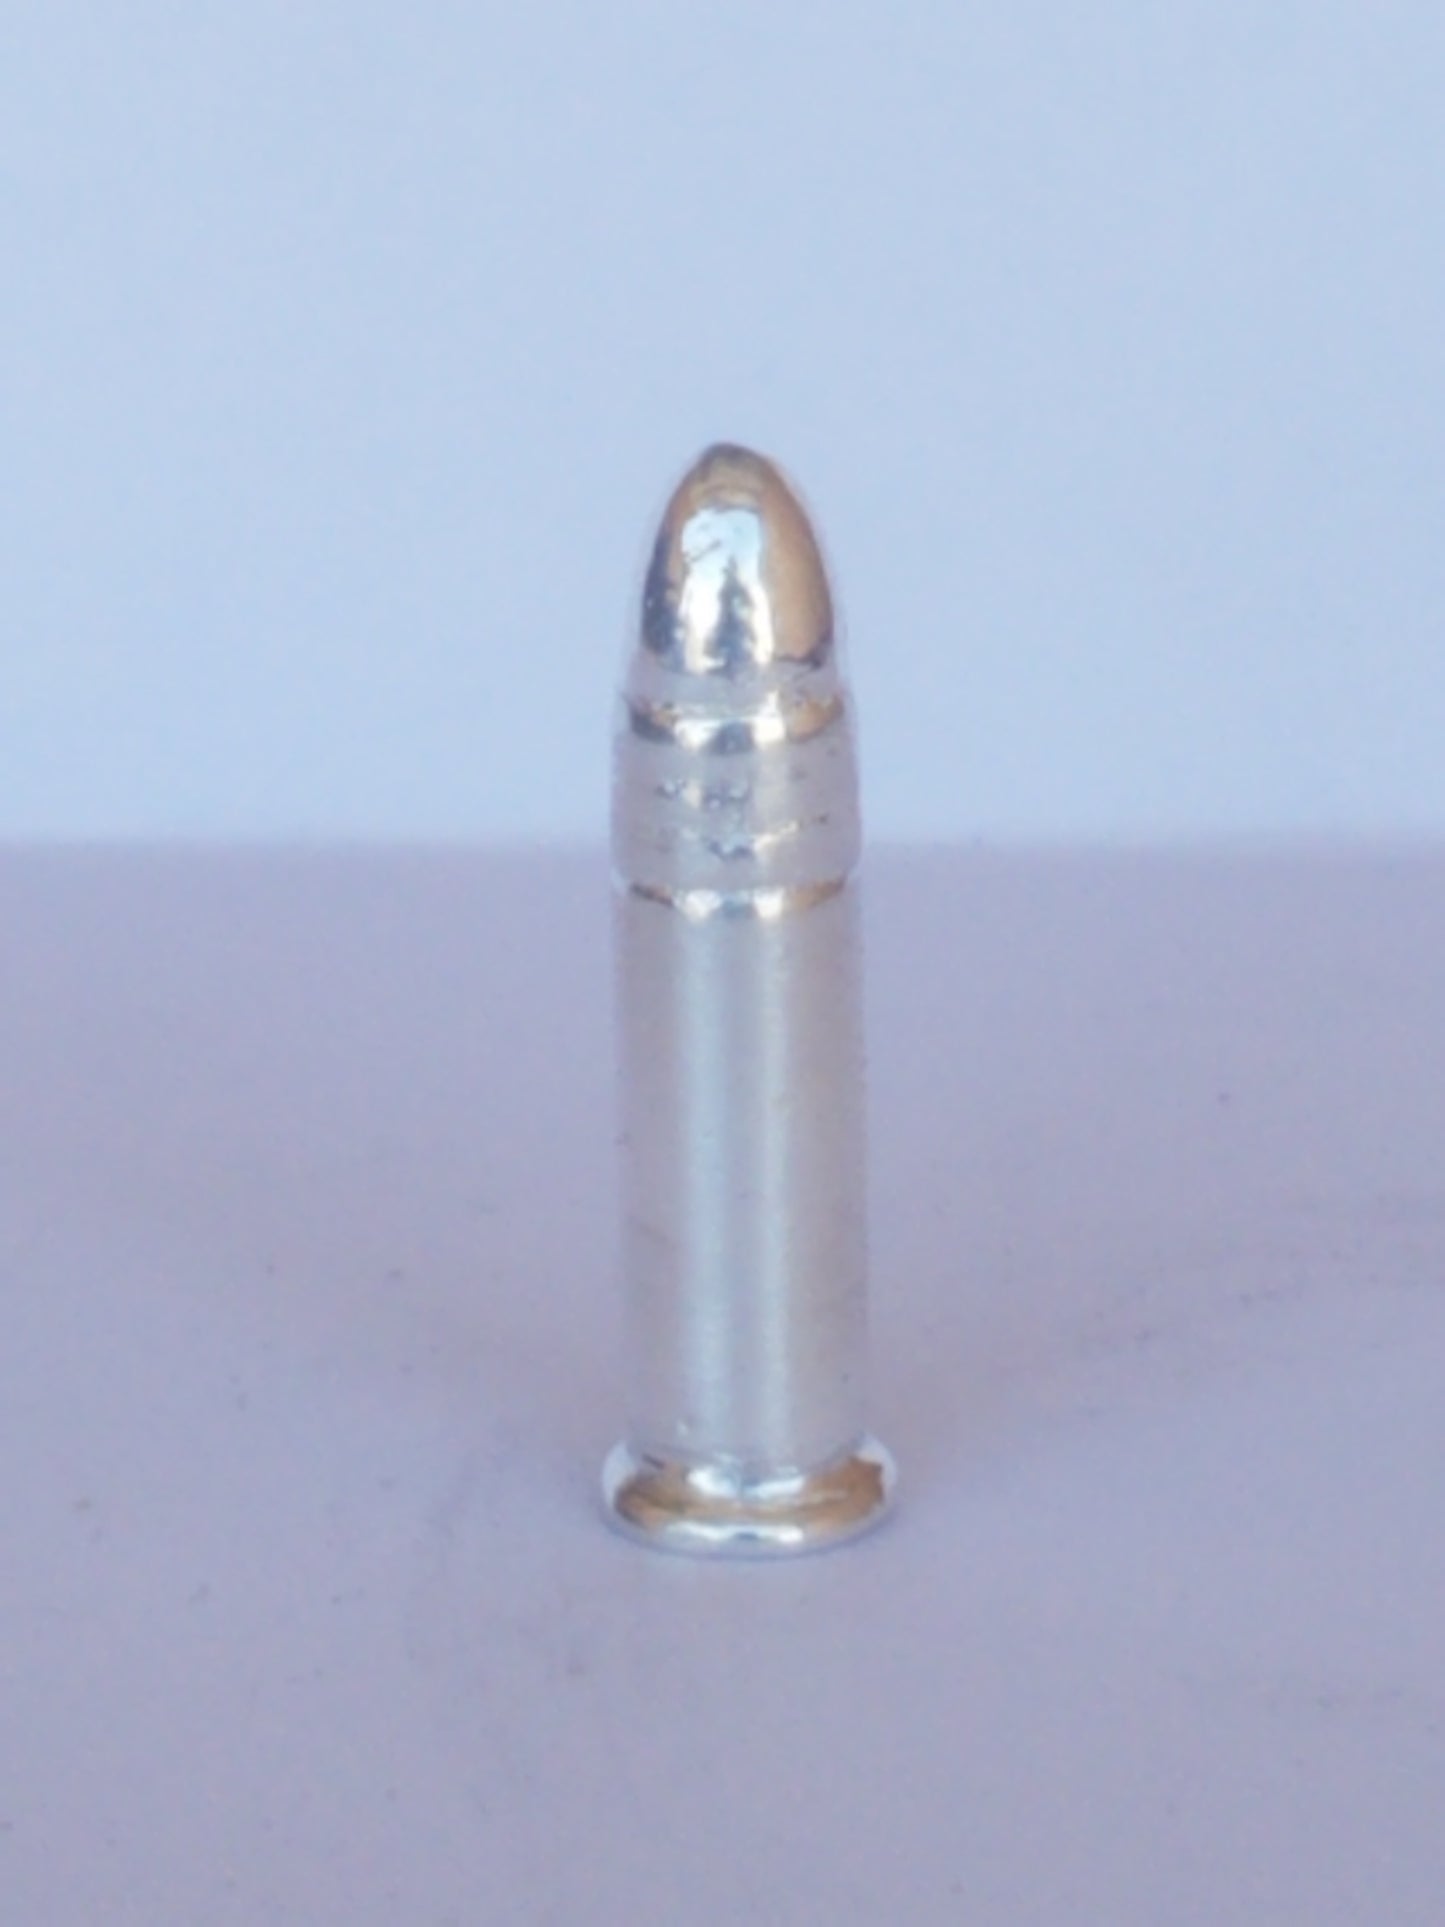 5g .999 Fine Silver Bullet Bullion - Collectible for Gun Enthusiasts